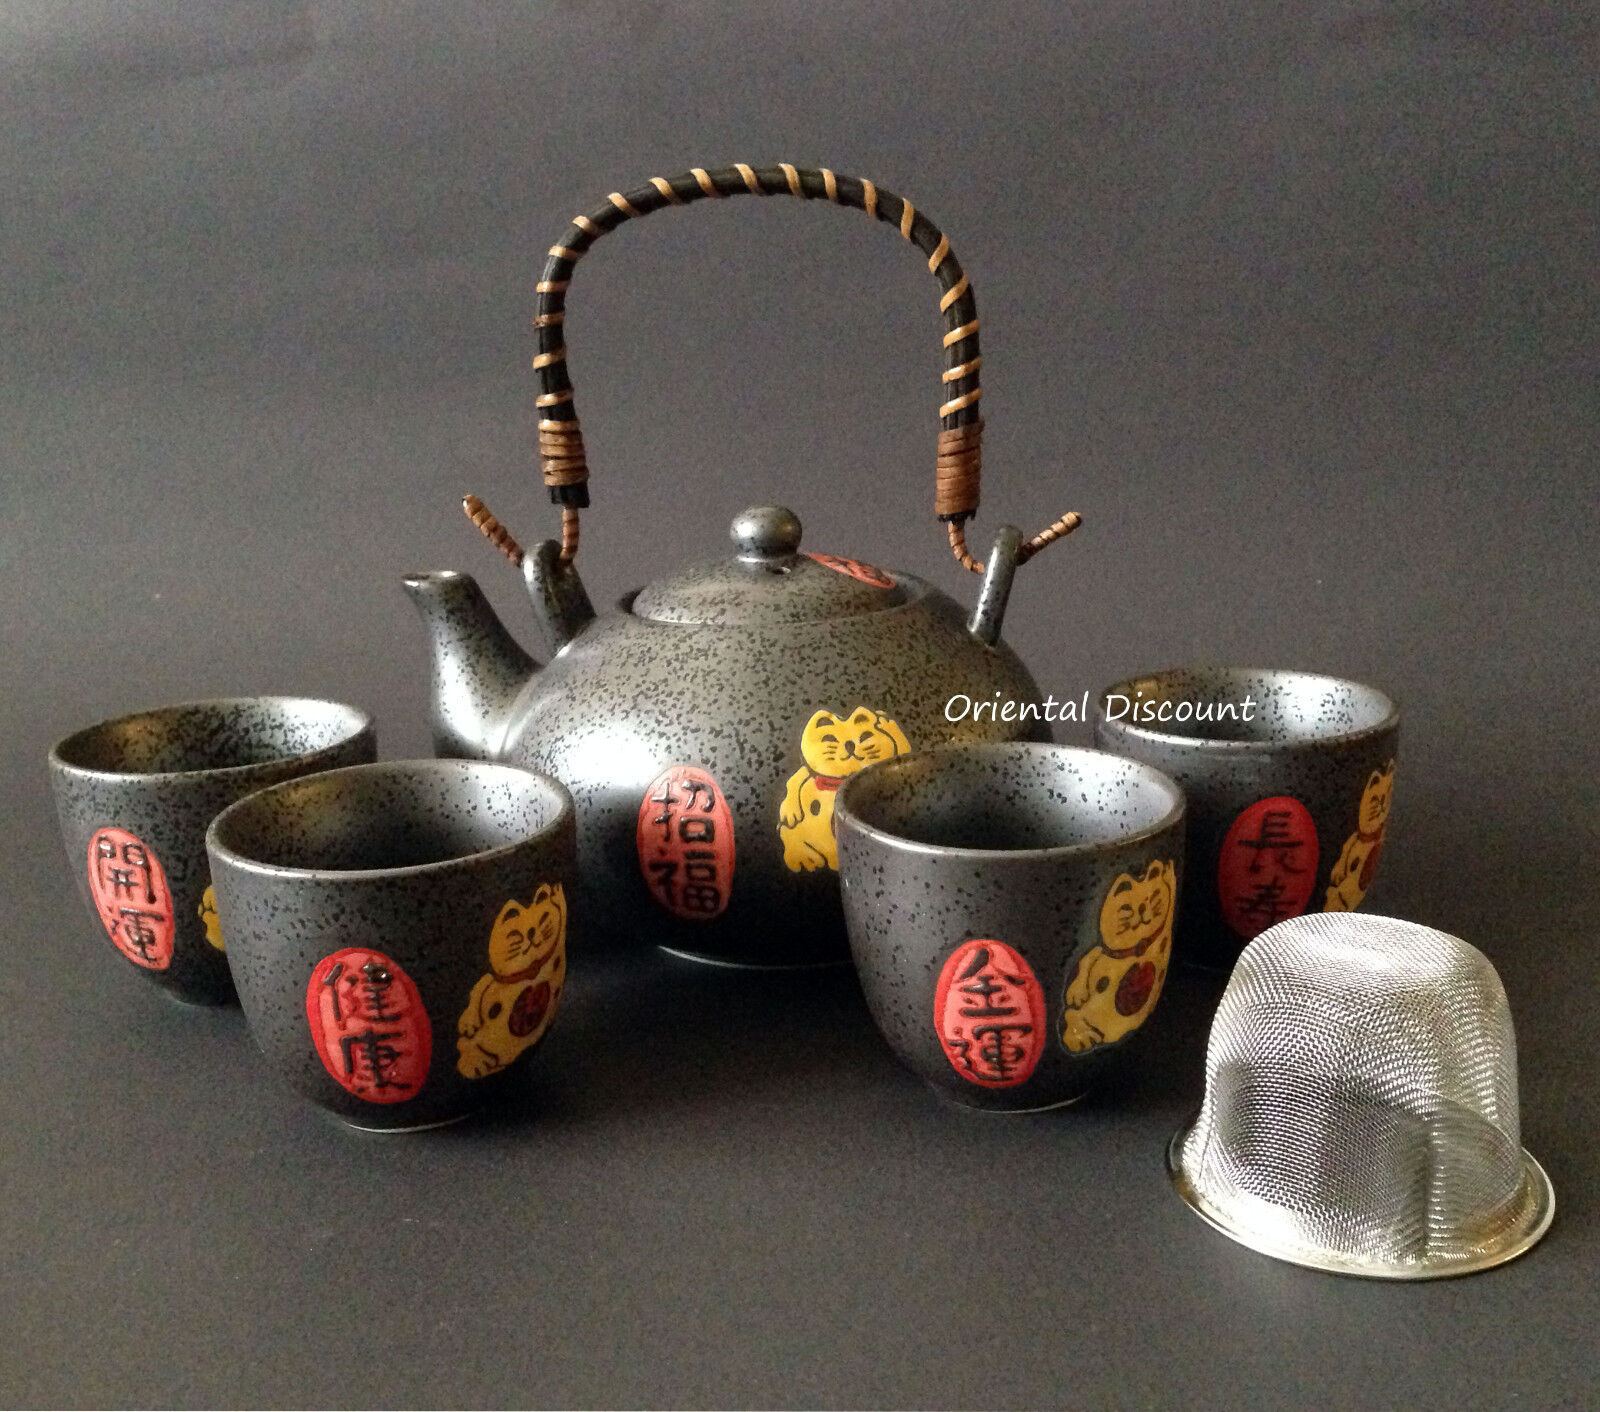 Japanese Ceramic Maneki Neko Lucky Cat Tea Set for Rich Health Fortune Longevity